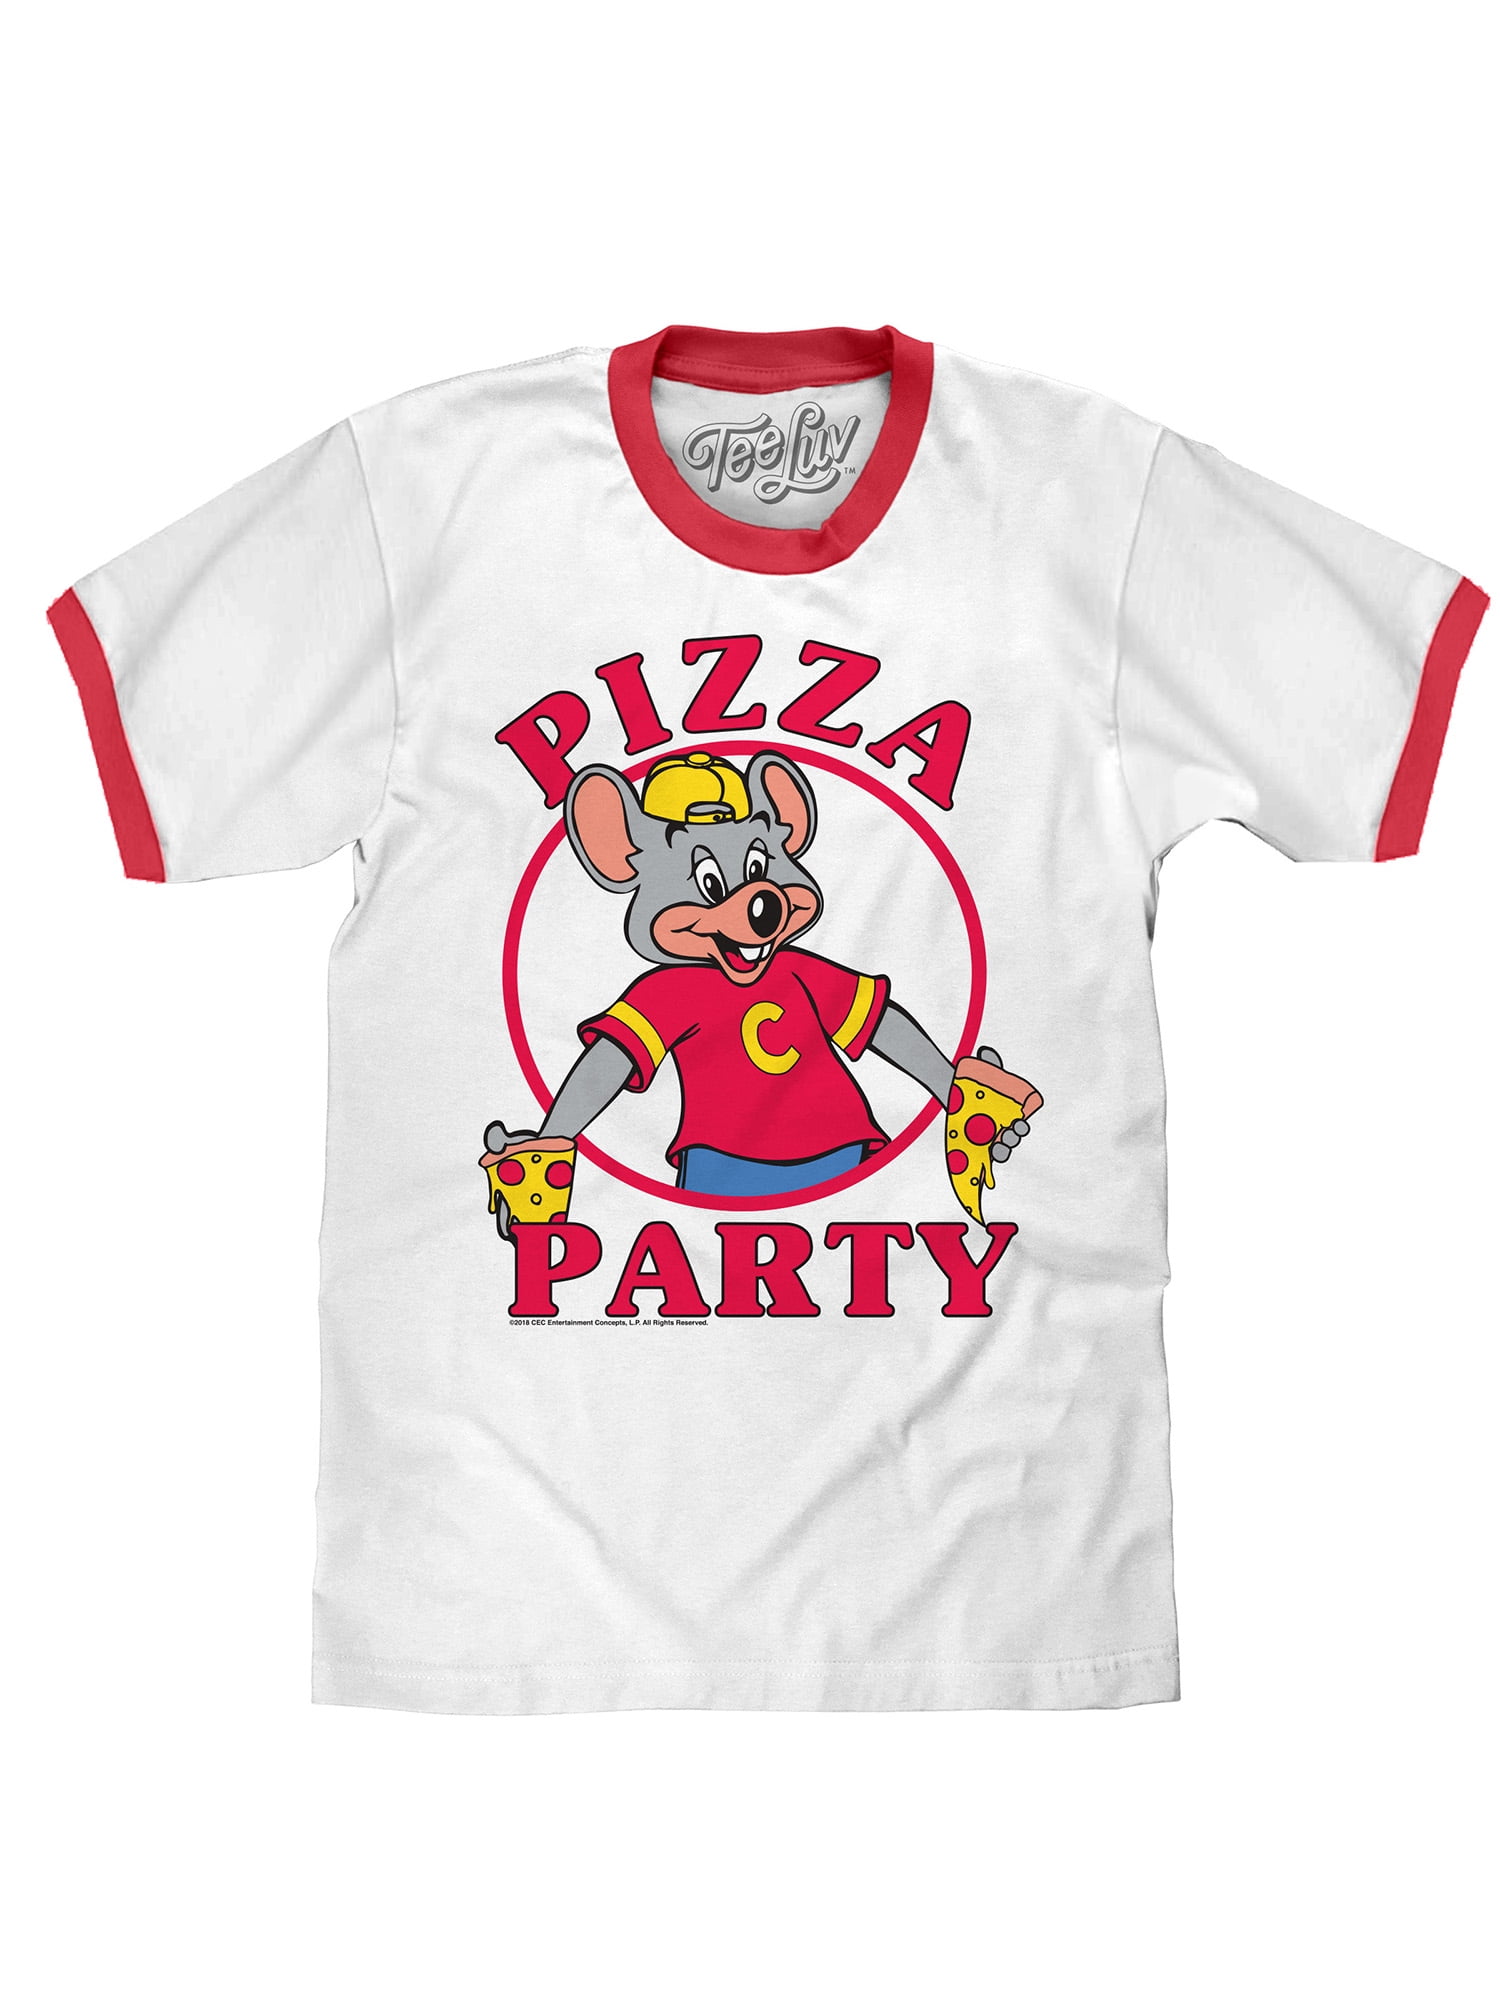 Tee Luv Tee Luv Chuck E Cheese S Pizza Party Ringer T Shirt White Red Walmart Com Walmart Com